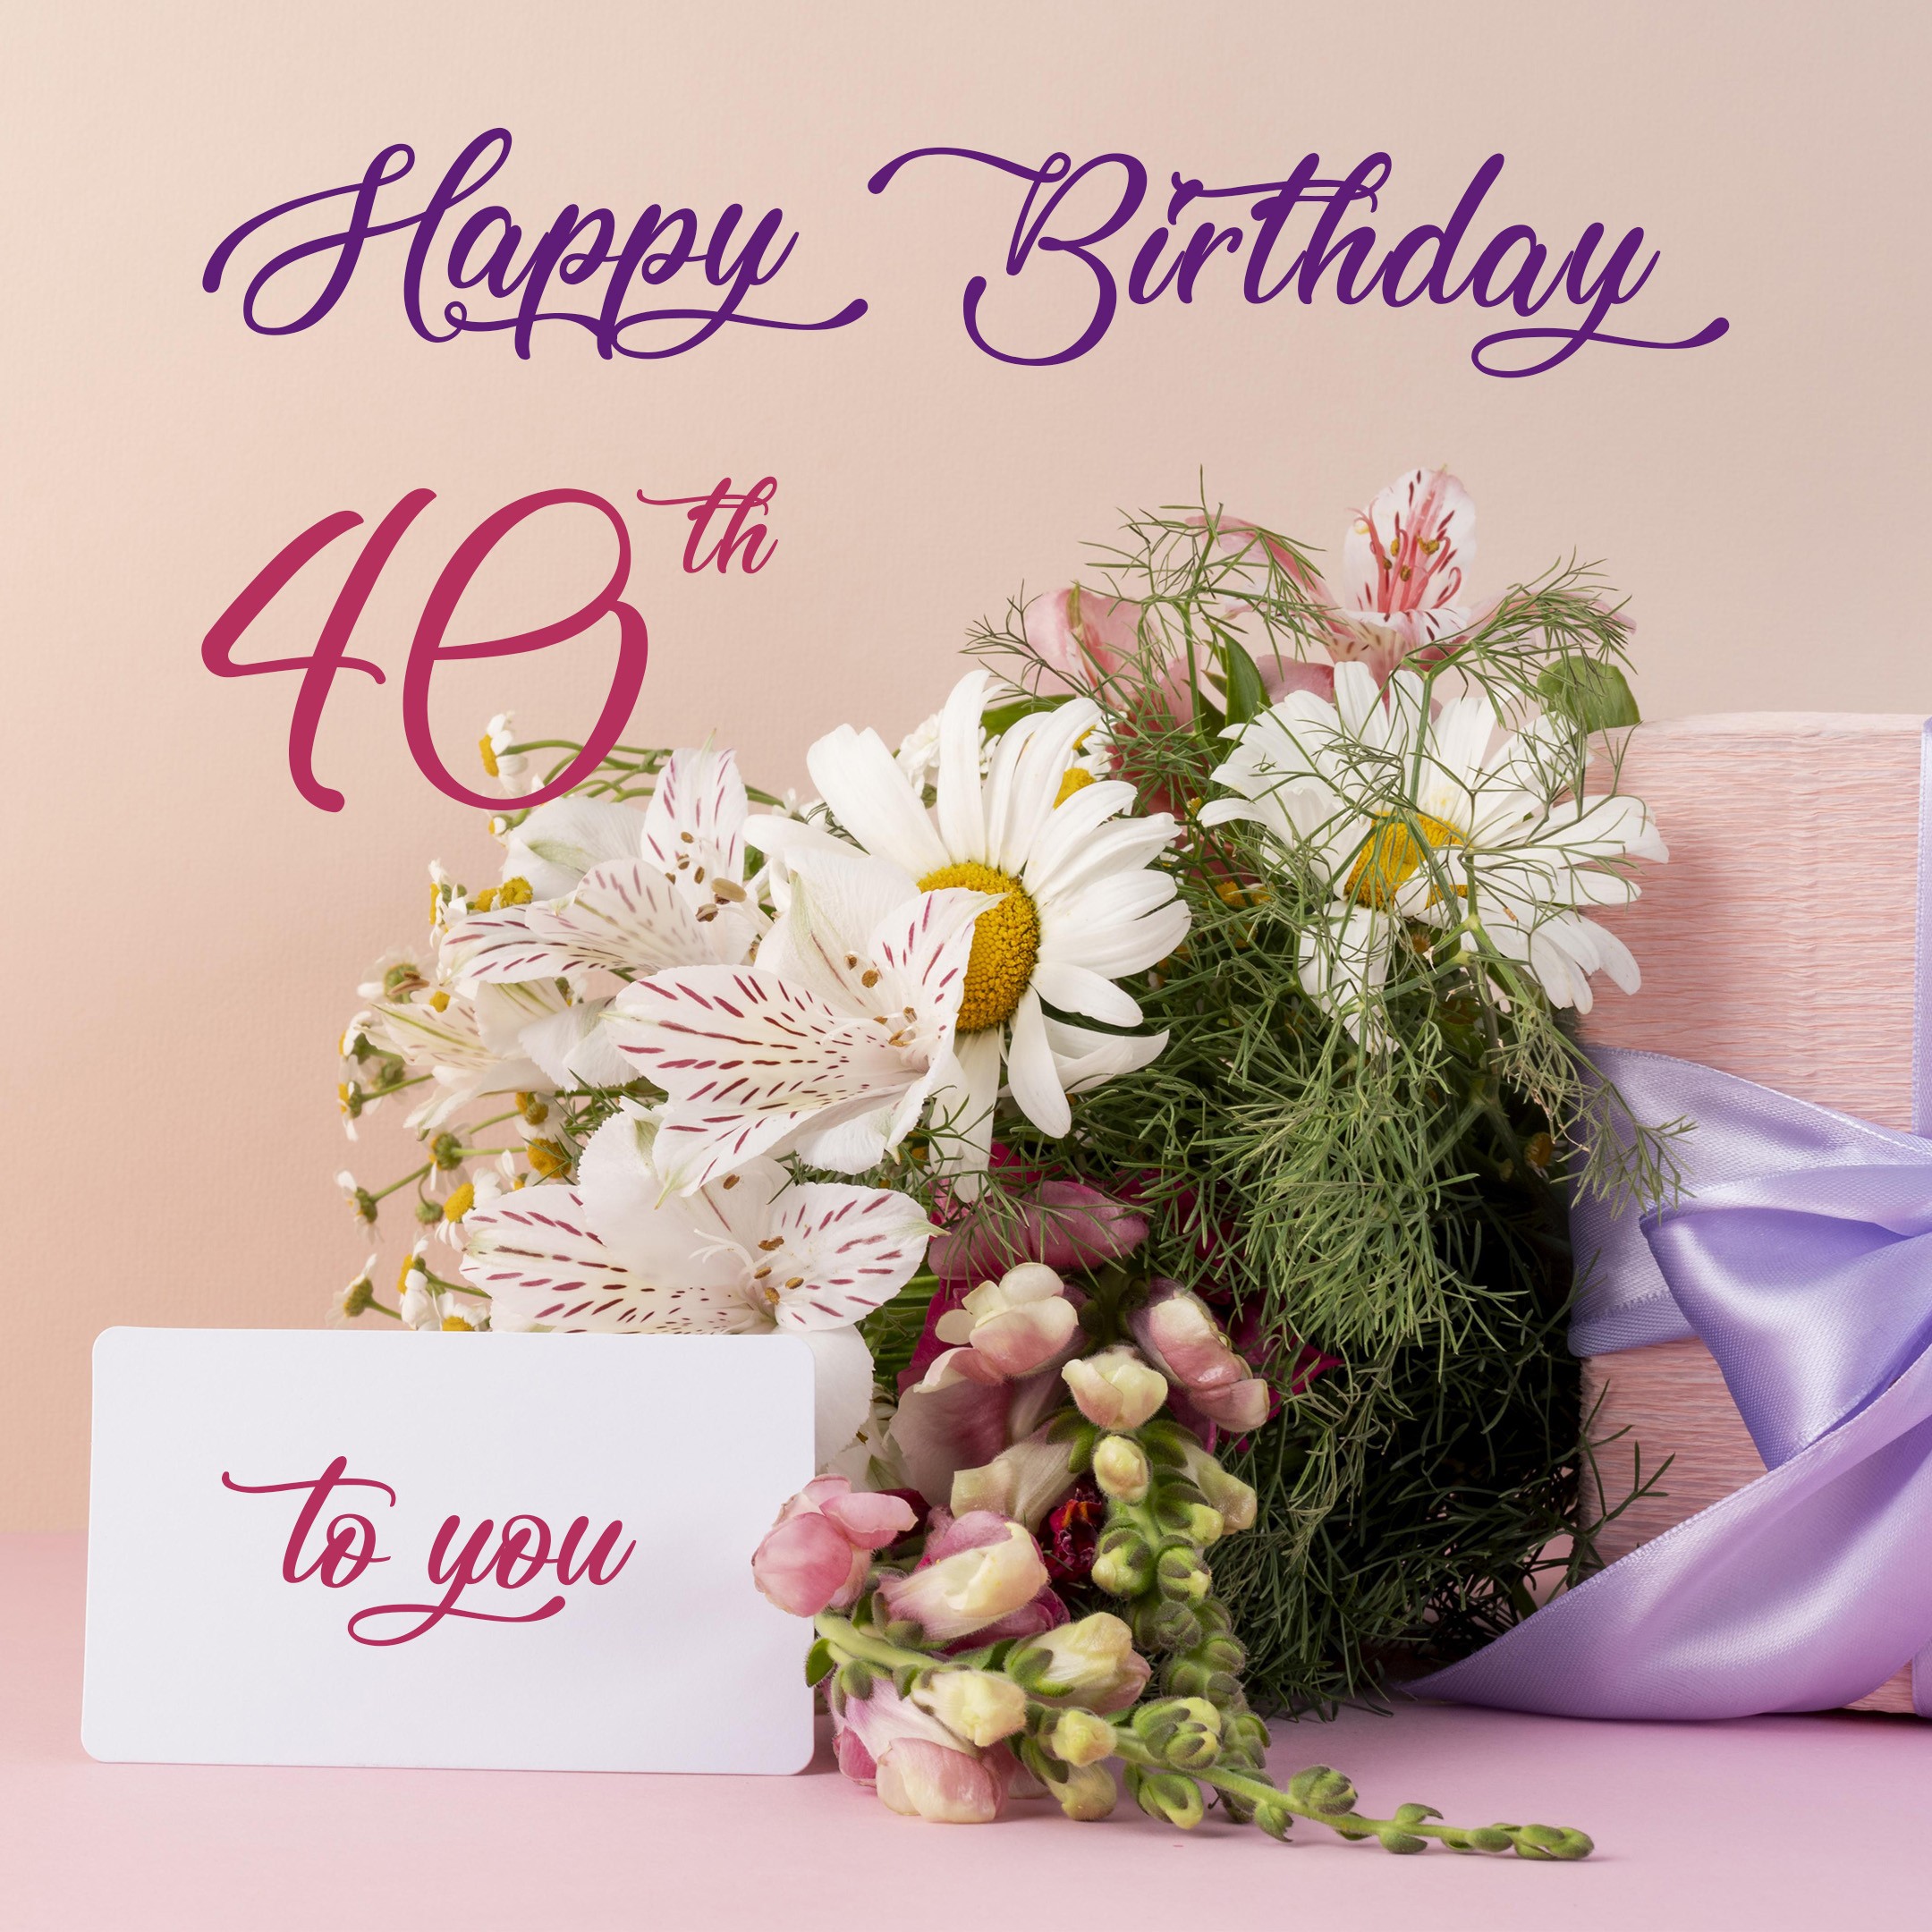 Free 40th Years Happy Birthday Image With Flowers - birthdayimg.com